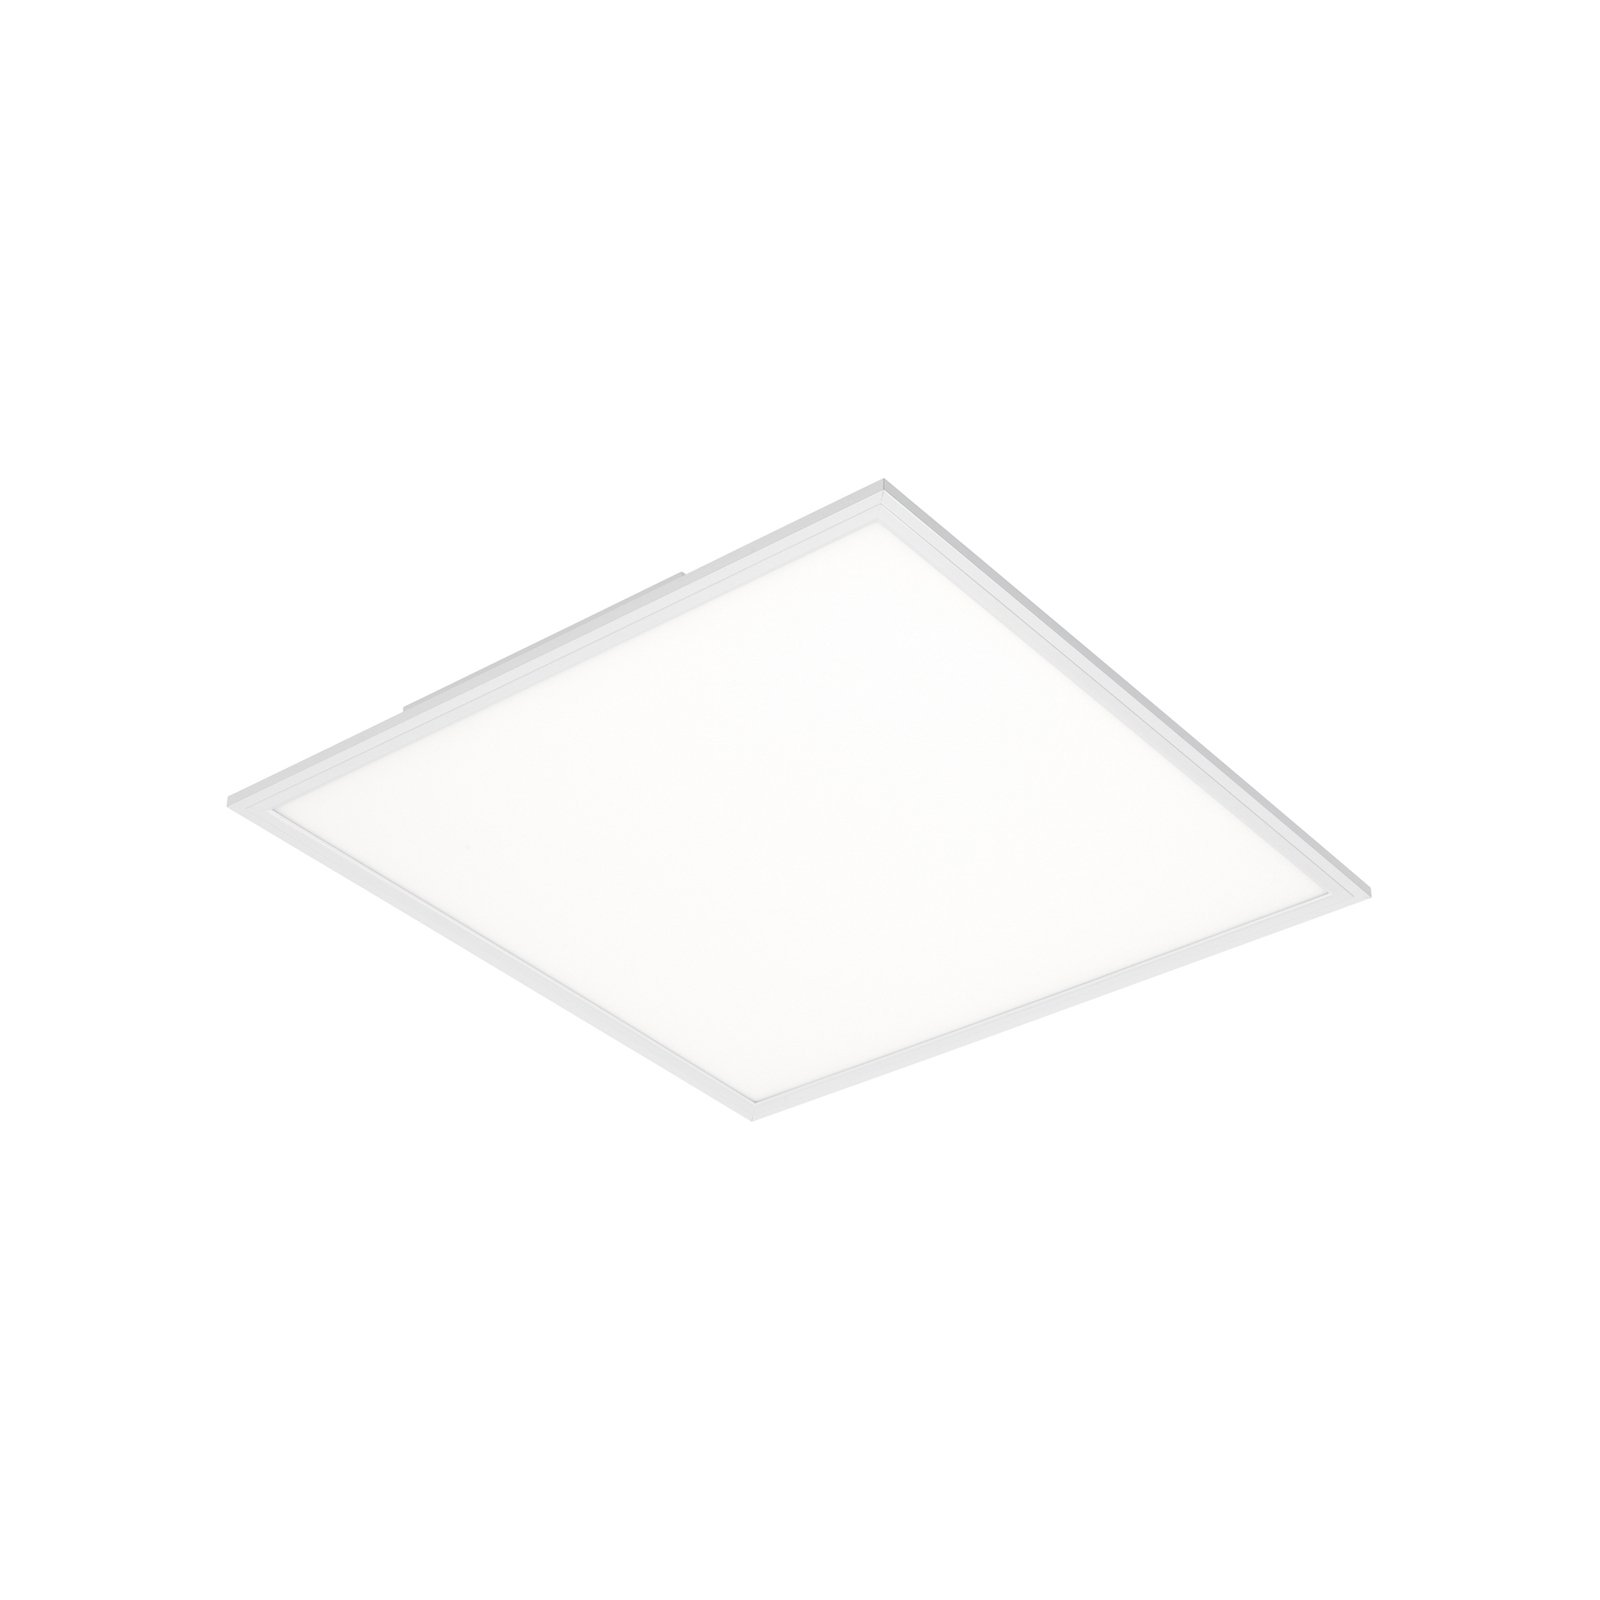 LED-Panel Simple weiß, ultraflach, 59,5x59,5 cm